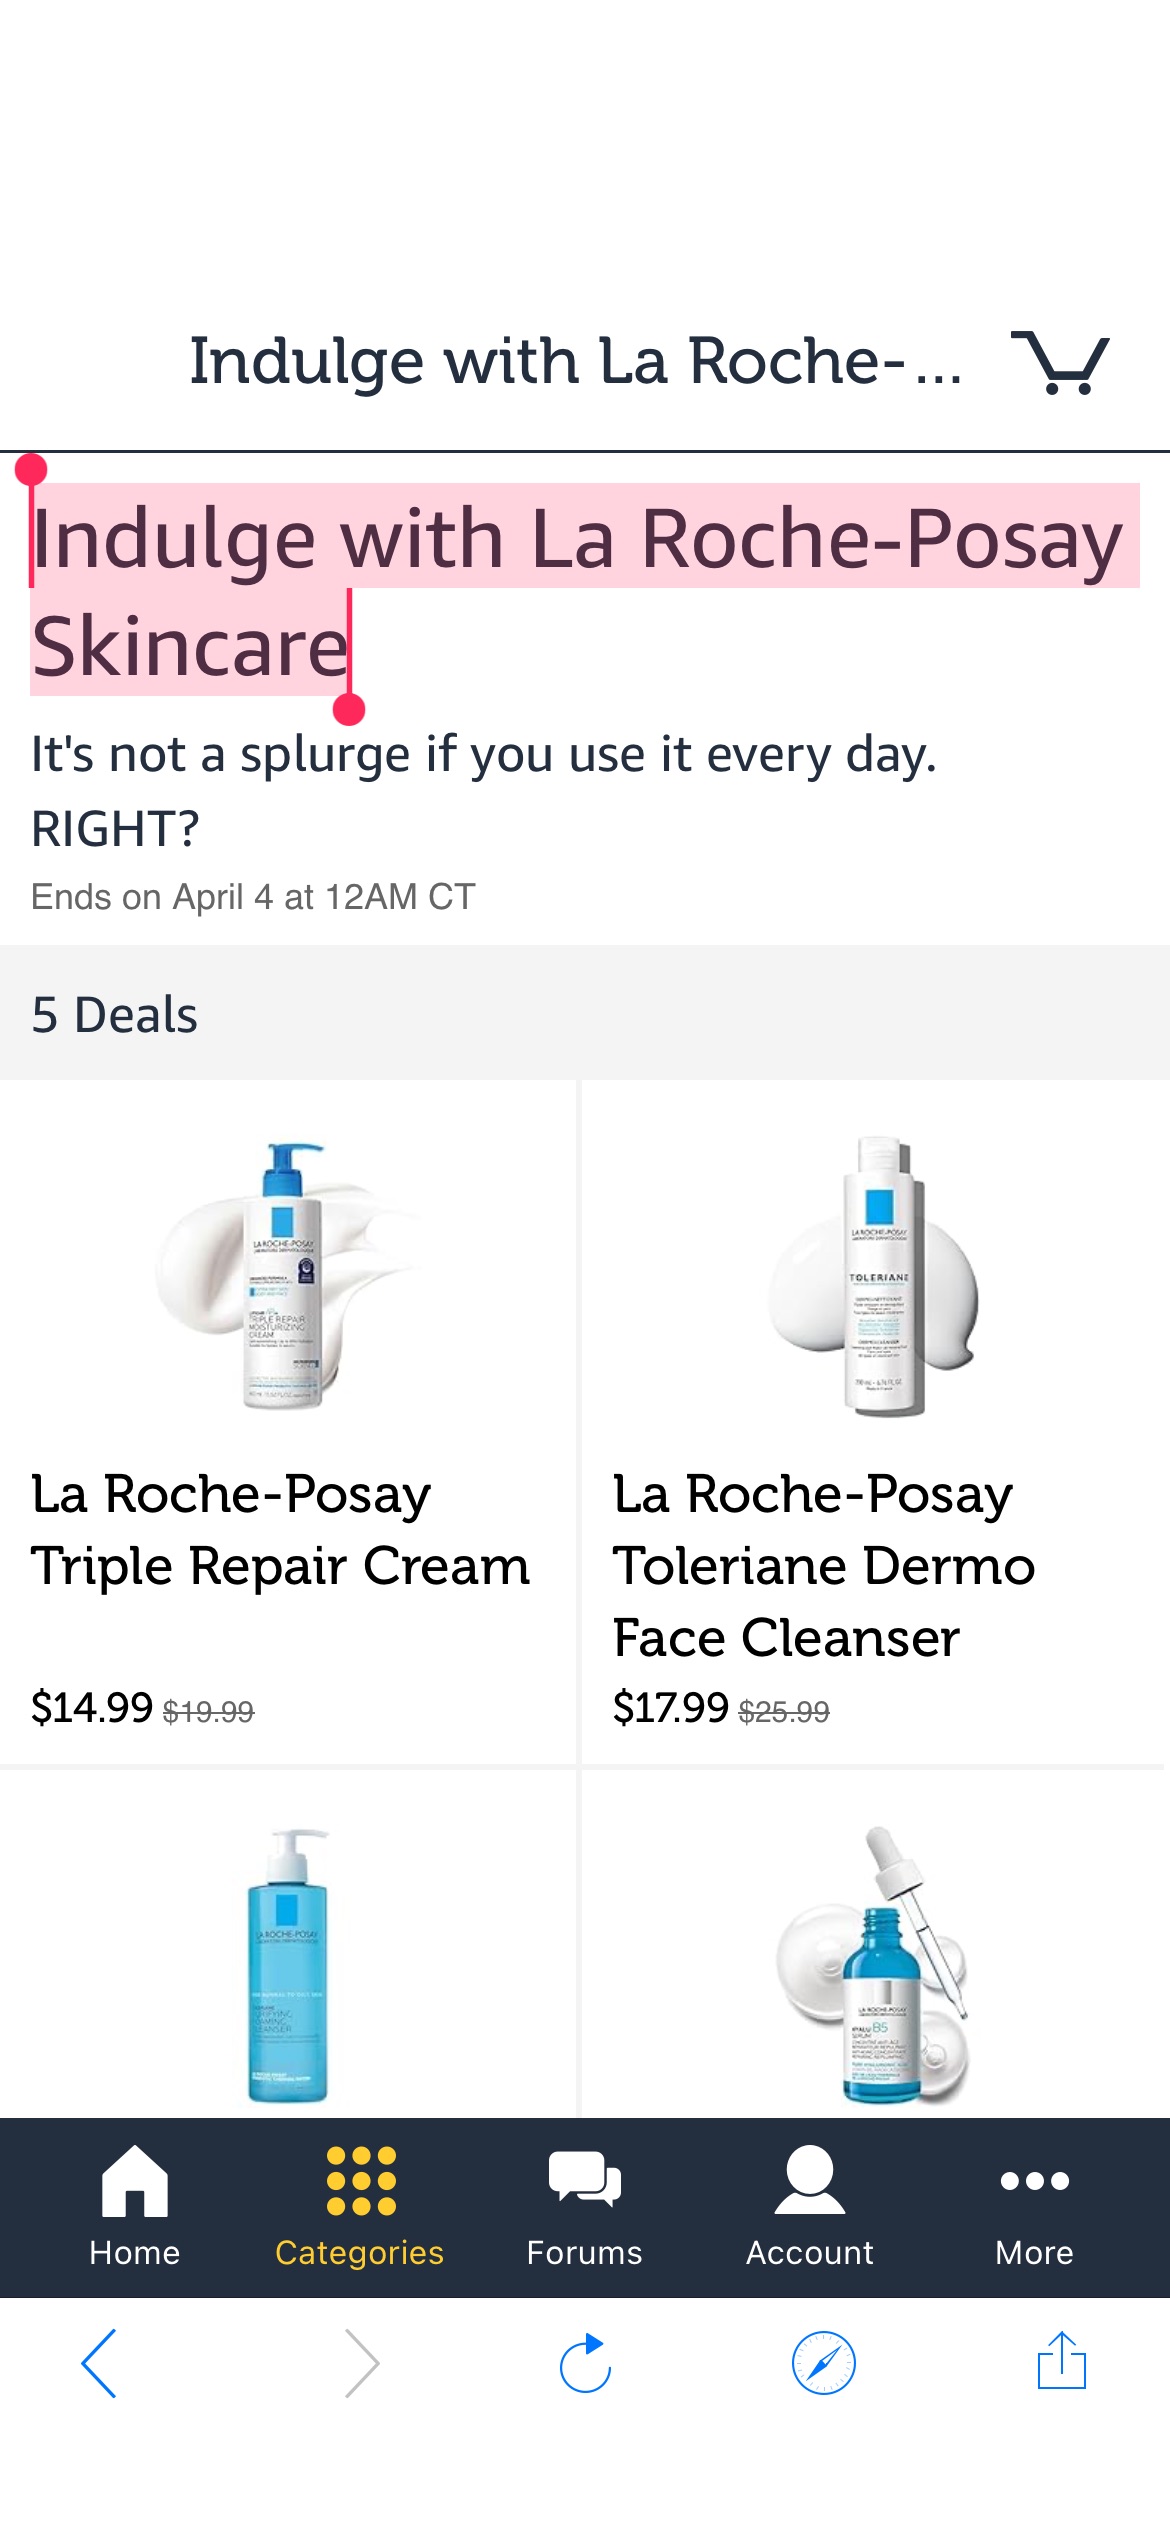 Indulge with La Roche-Posay Skincare